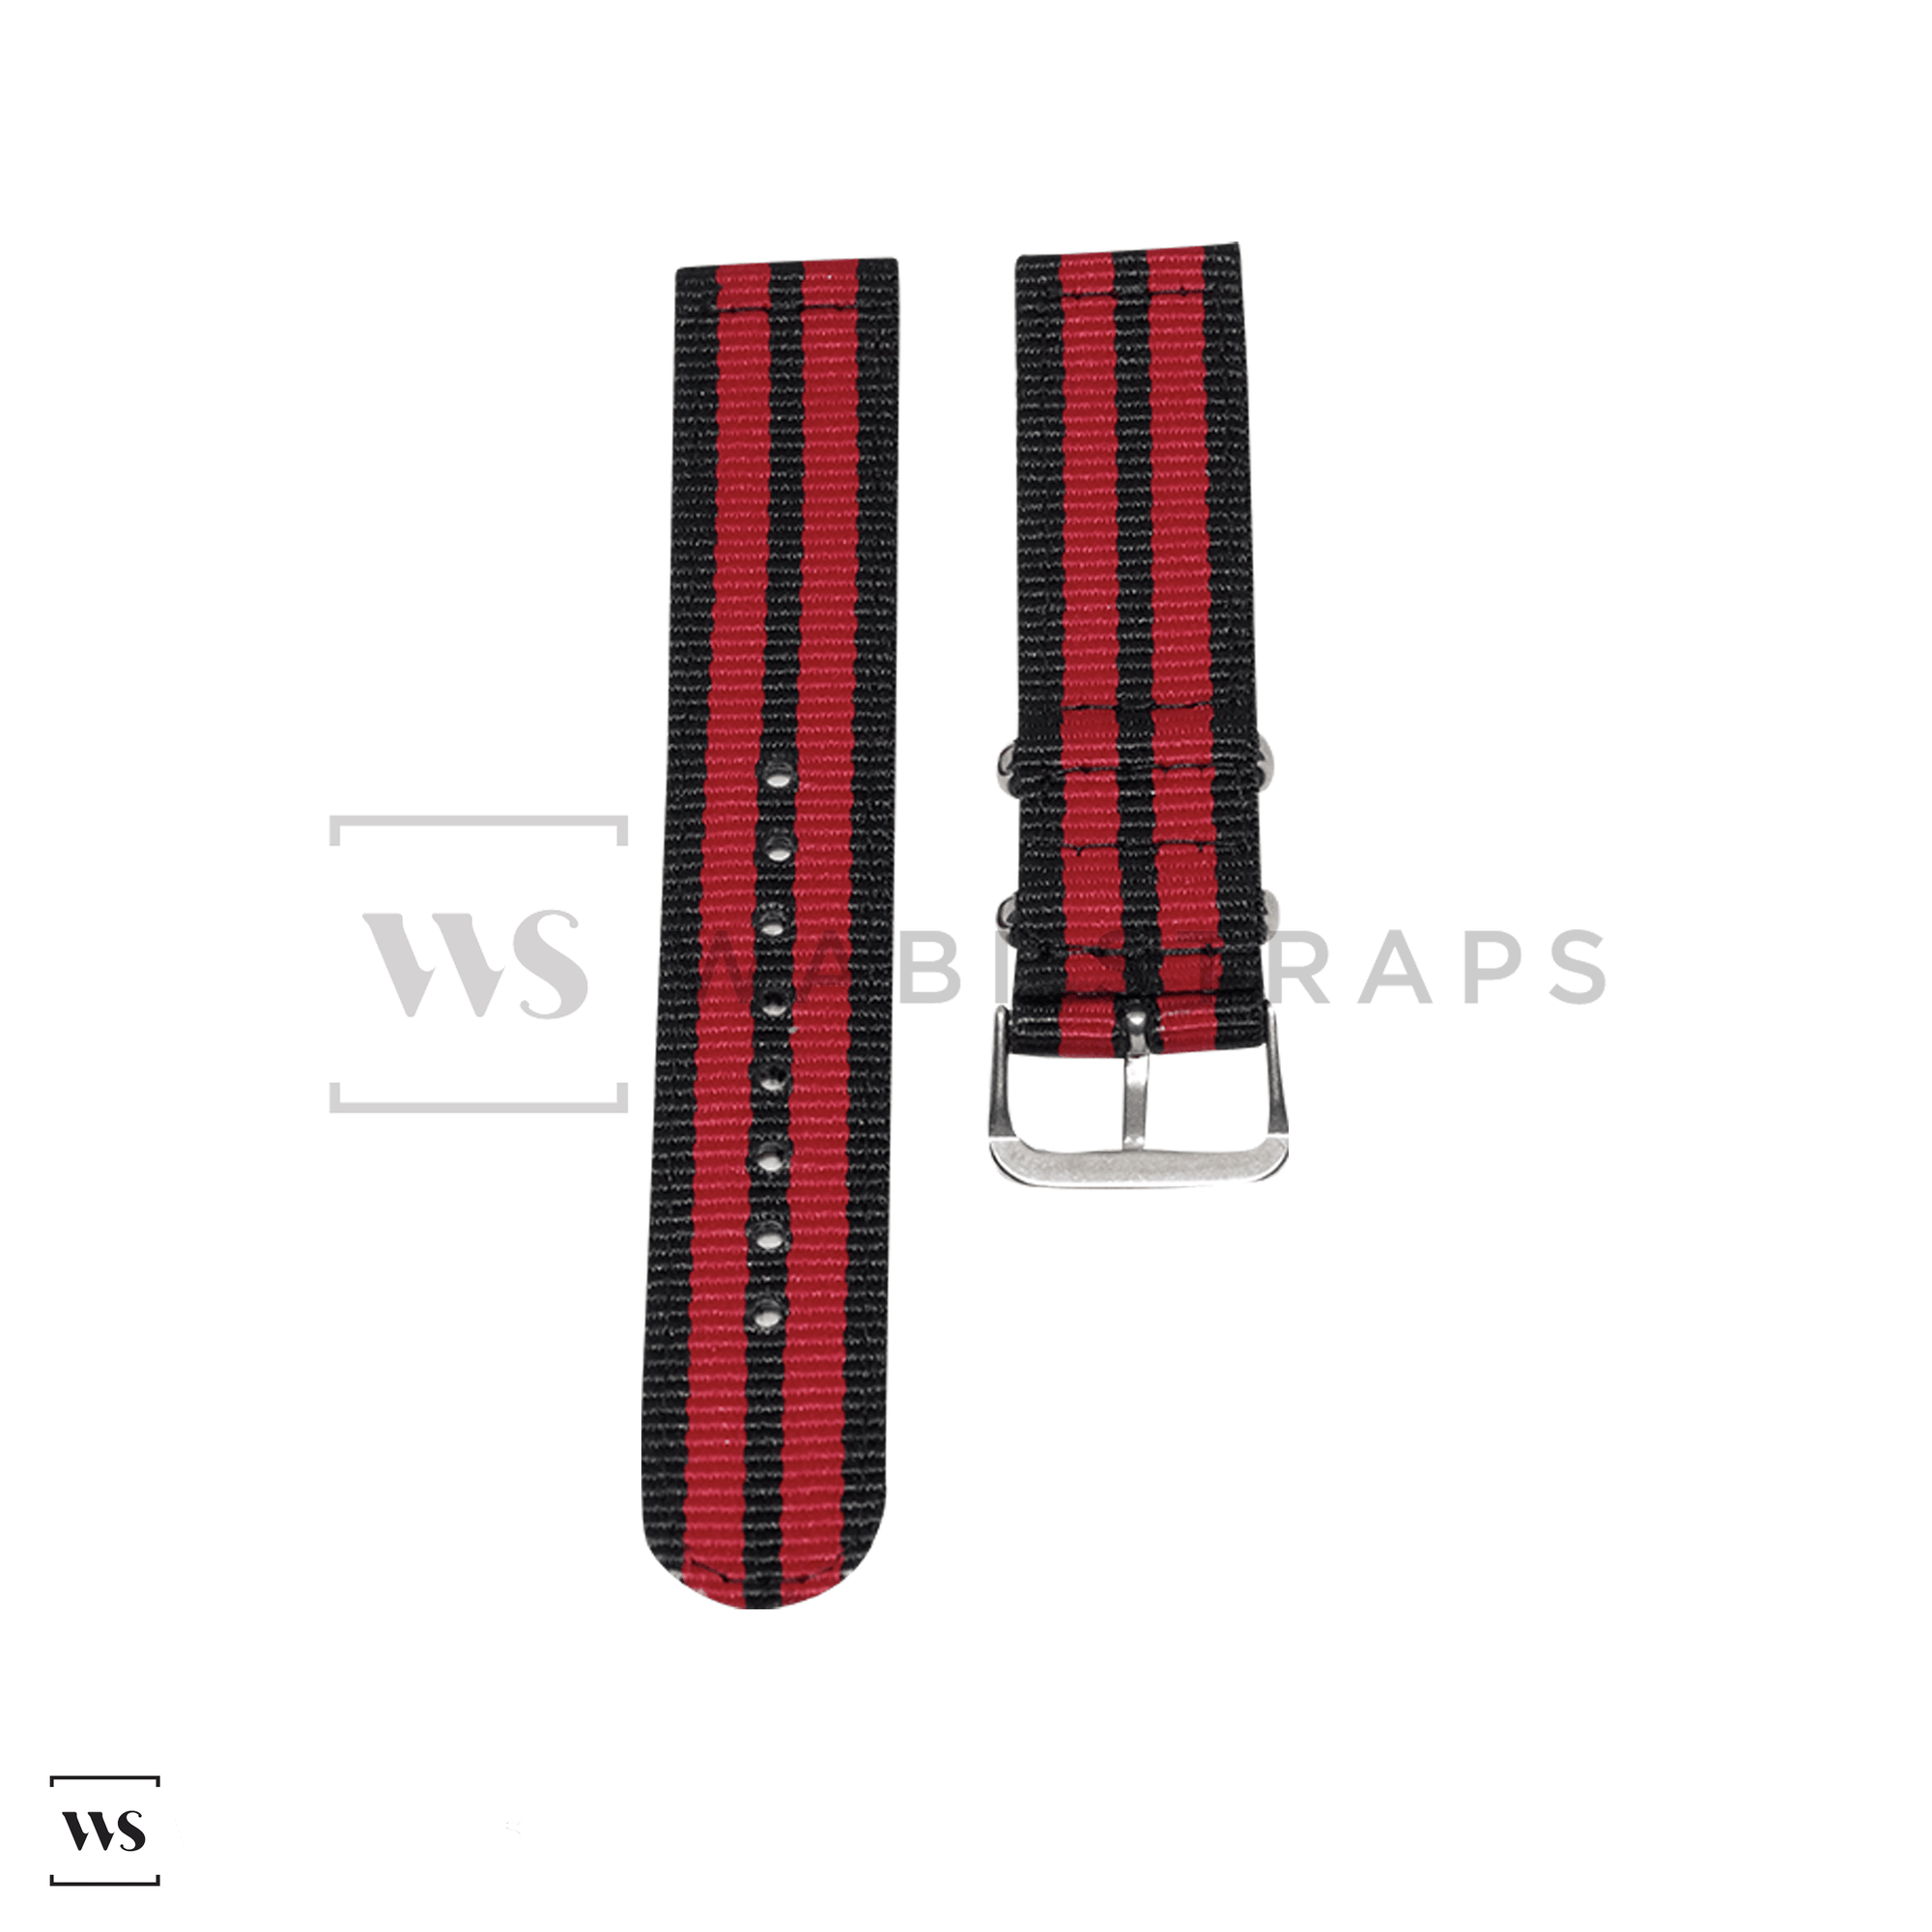 Red & Black Two Piece MilSpec Strap